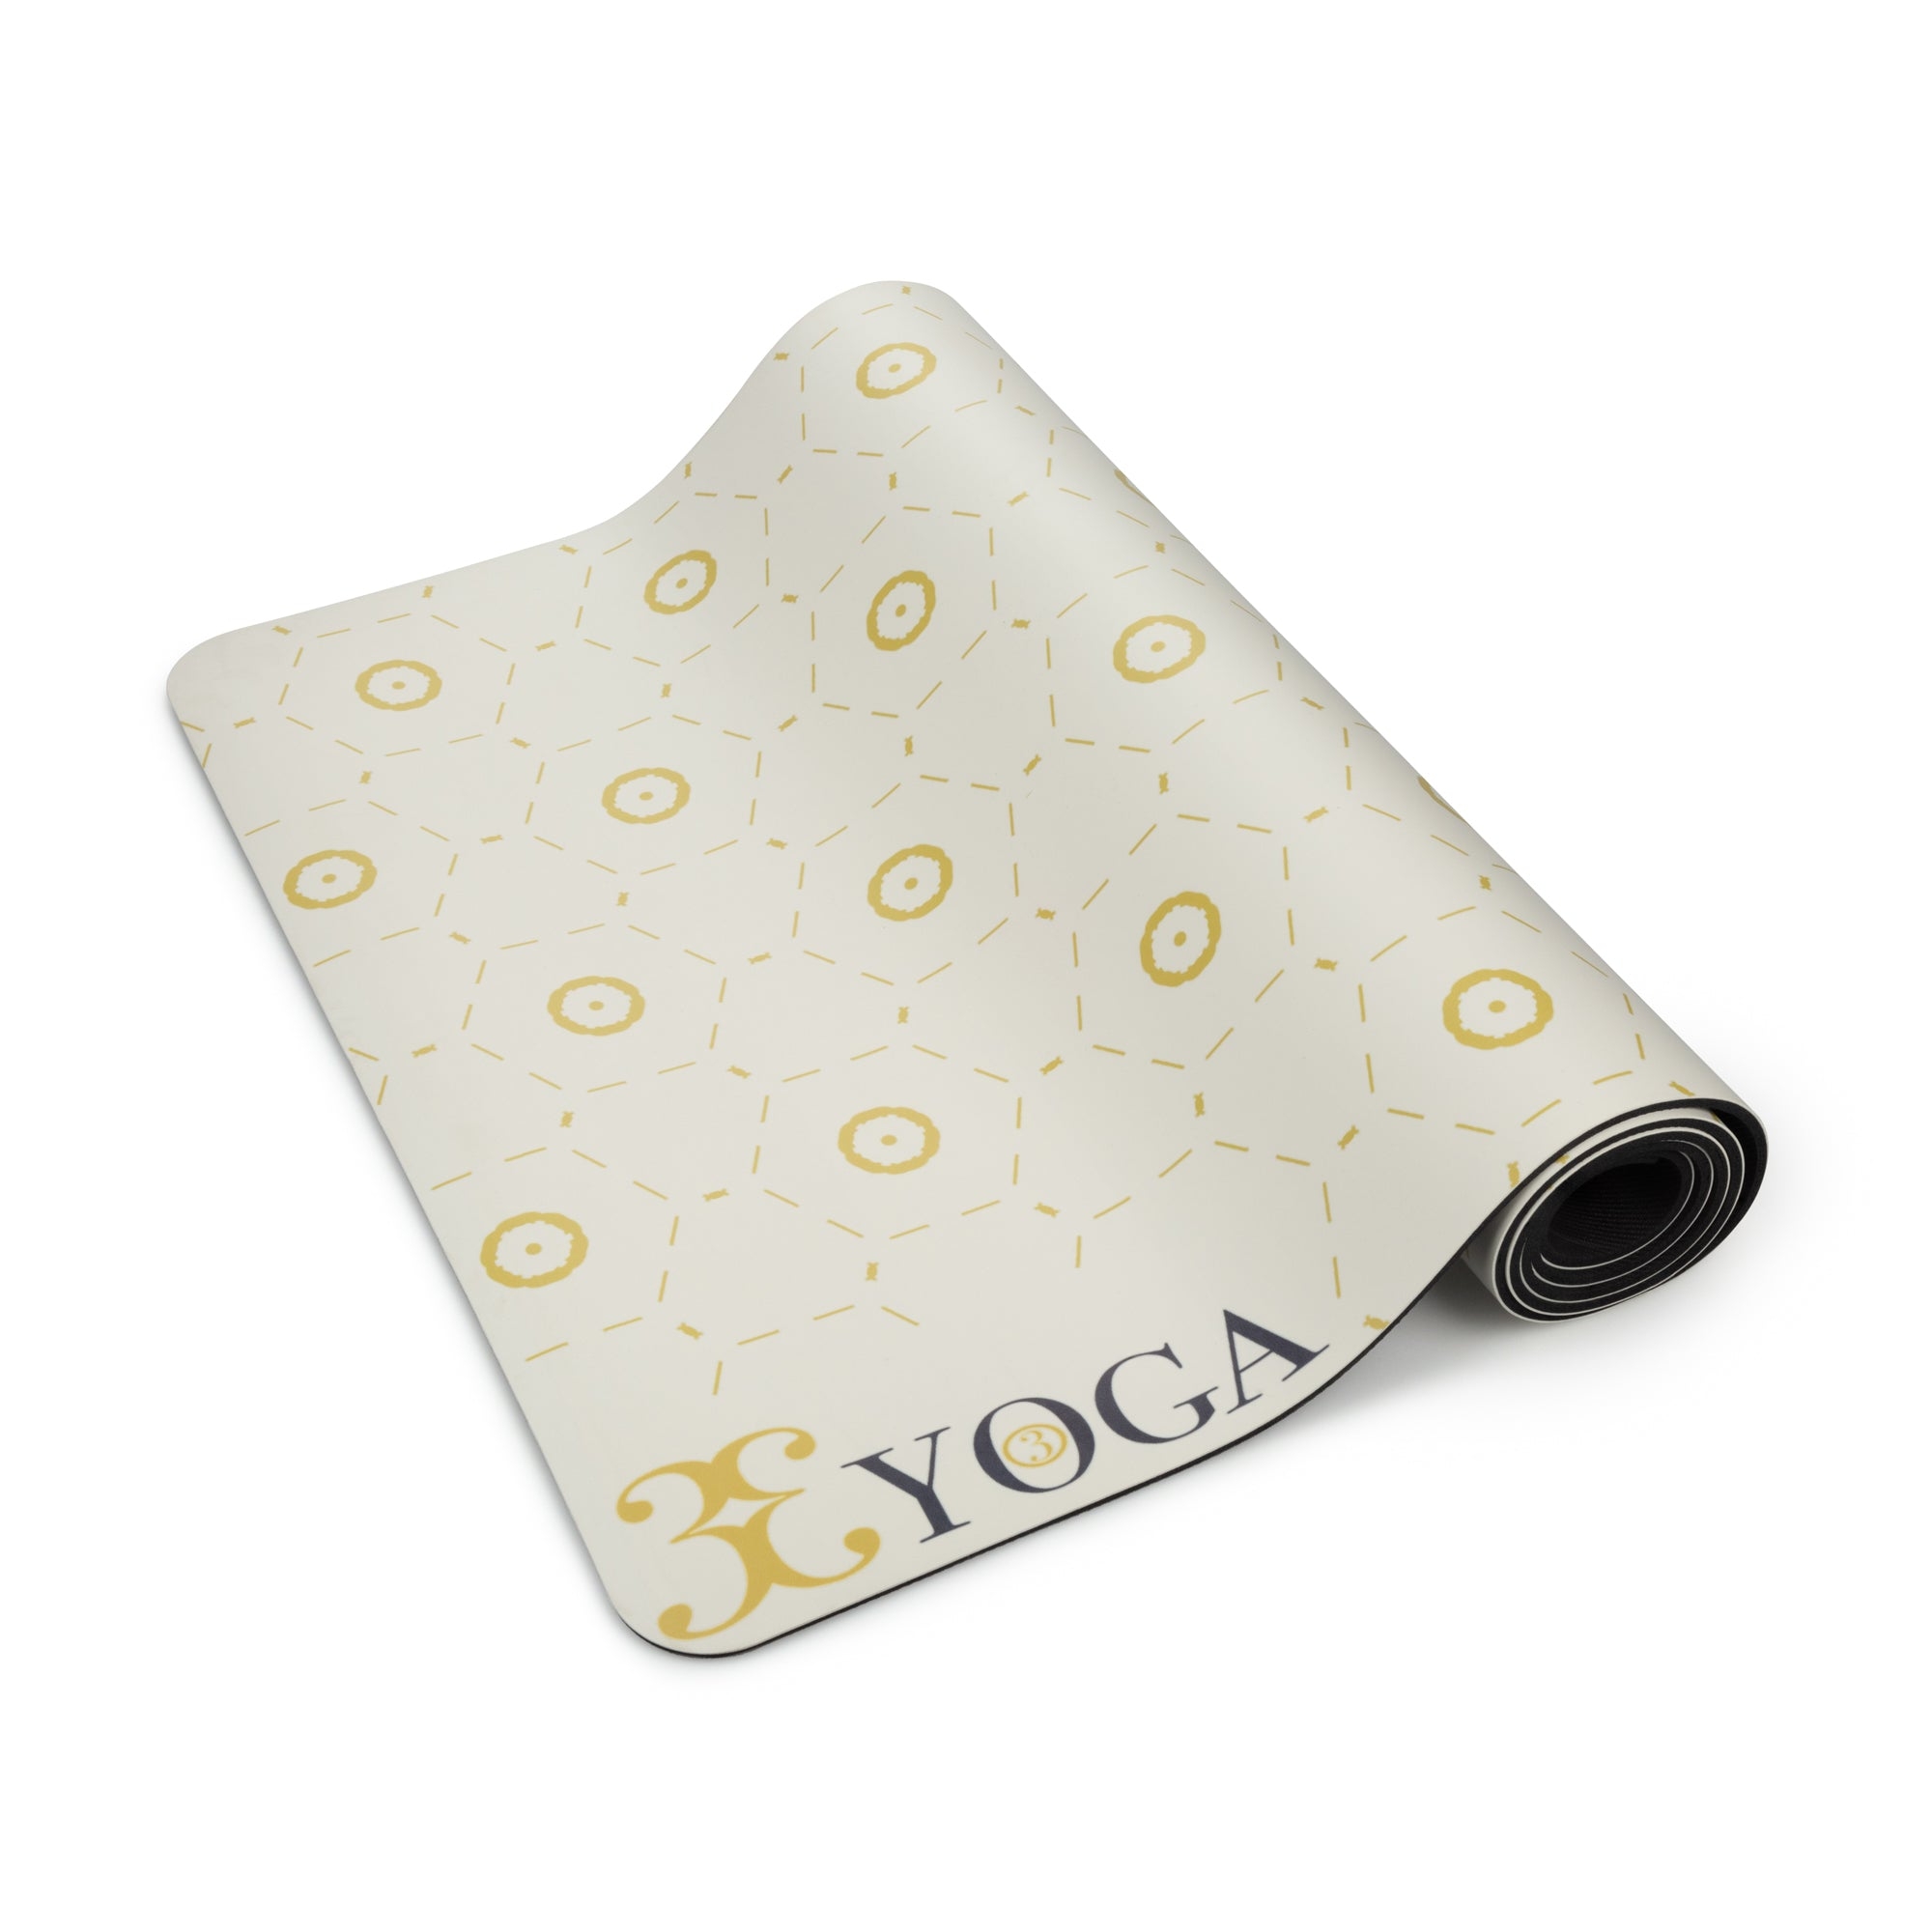 Zuber Yoga Mat – Yoga Mat – Exercise Mat – Non Slip Surface – Natural Rubber – Eco Friendly & Biodegradable – Third Eye Yoga